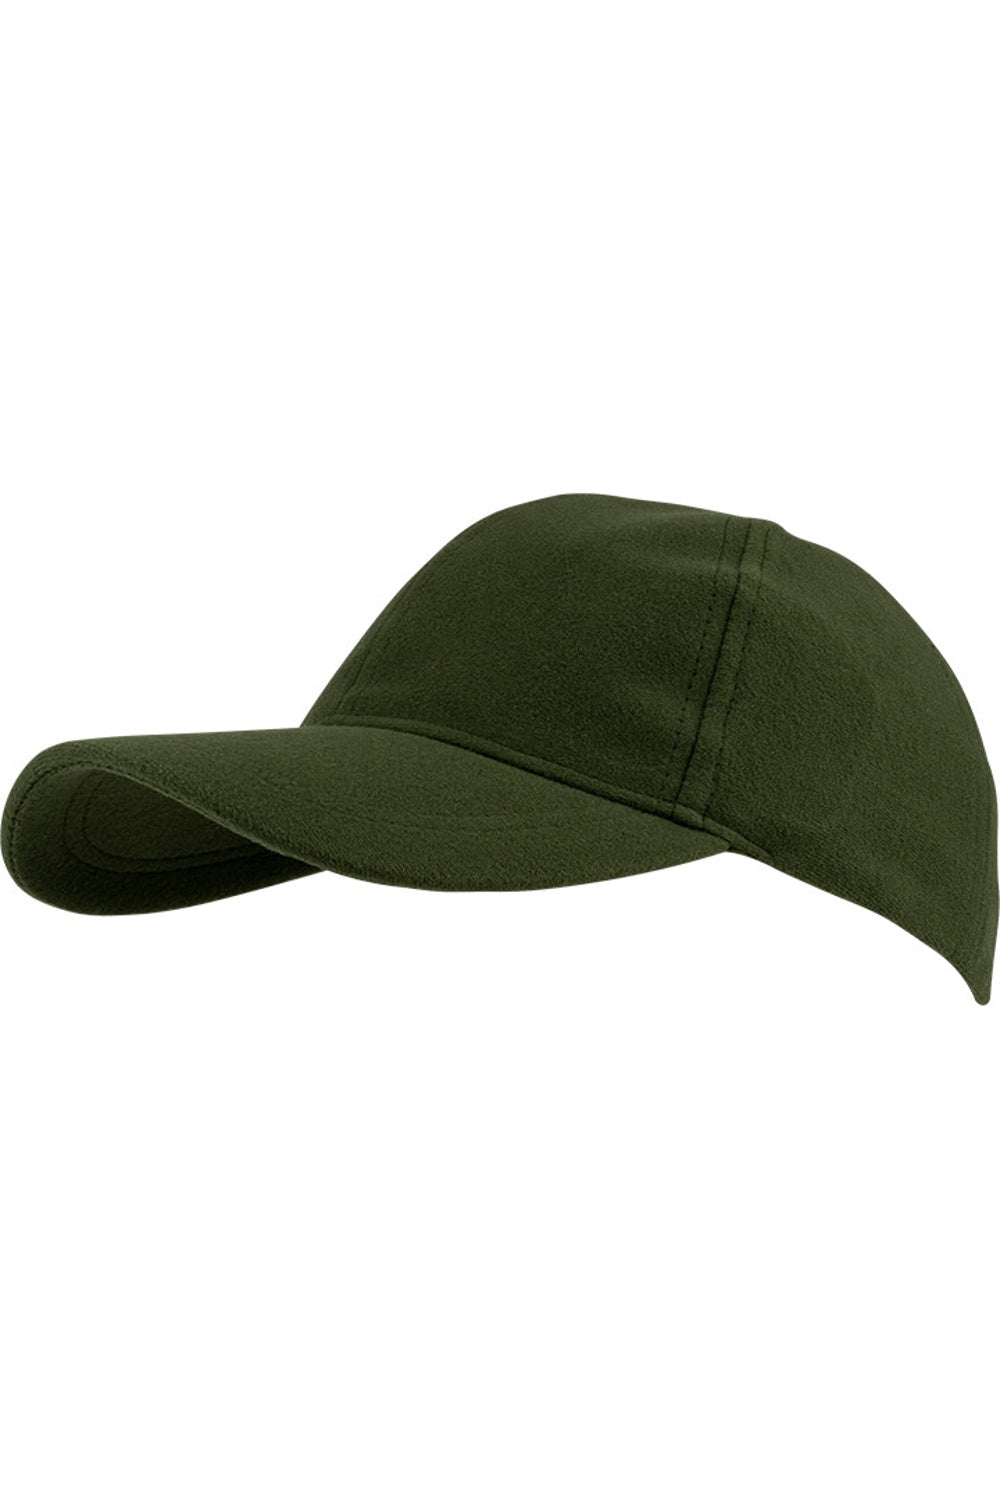 Jack Pyke Stealth Baseball Hat in Green 